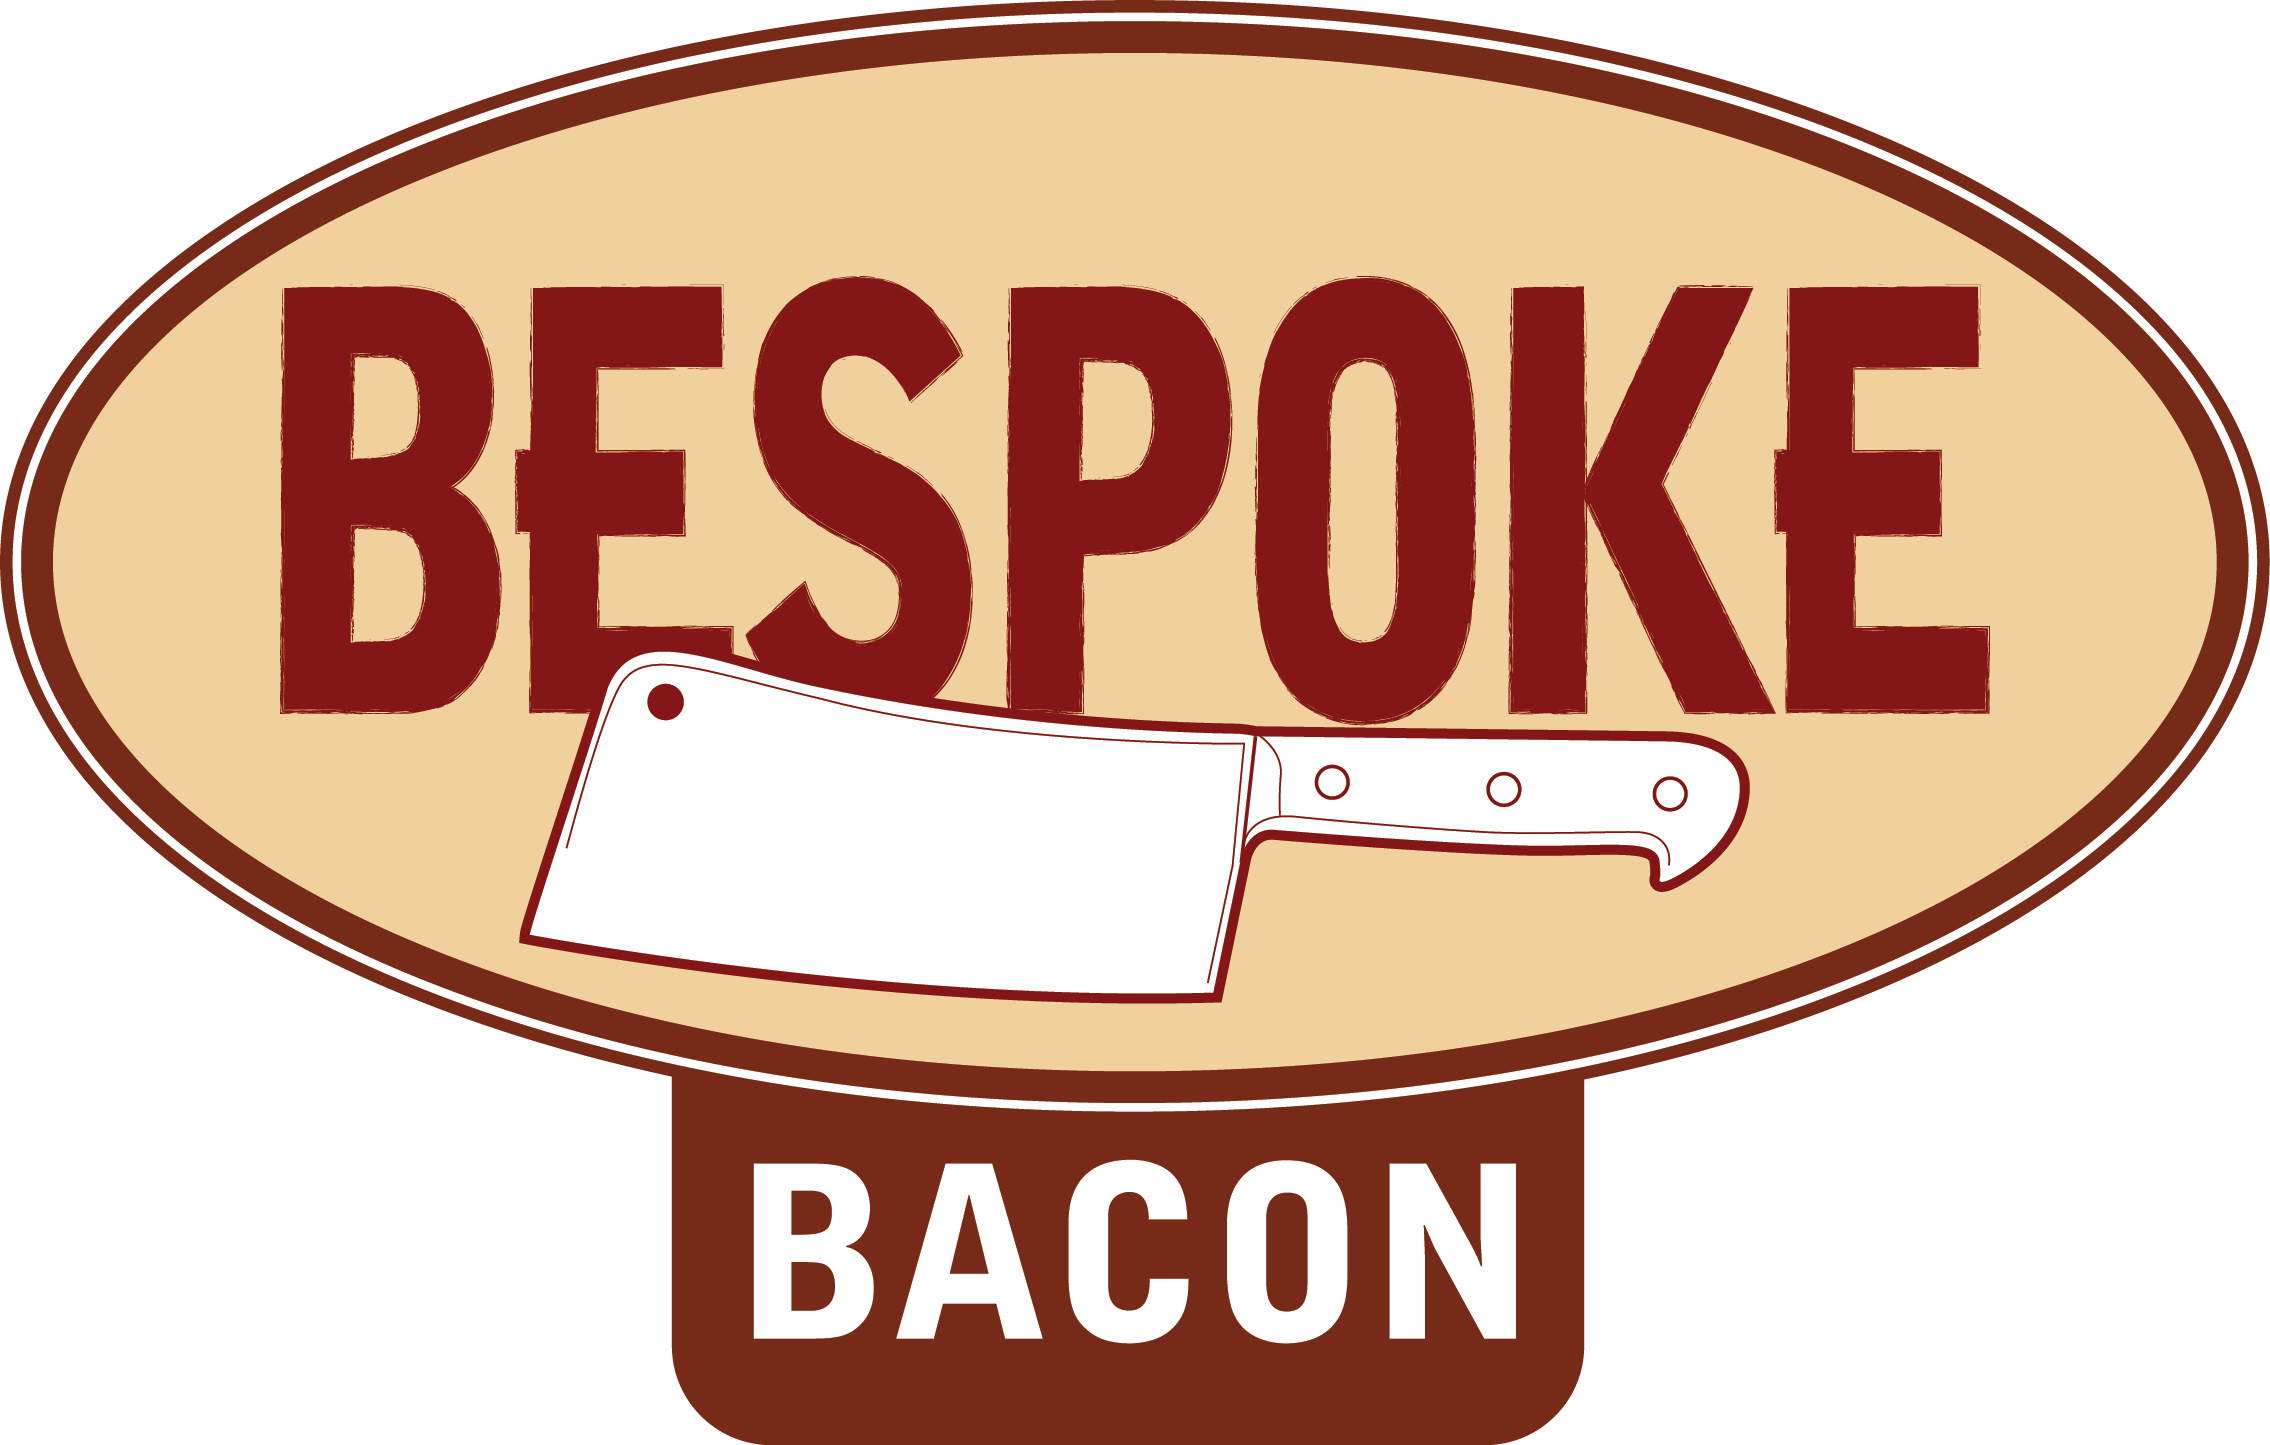 Bespoke Bacon - Bespoke Bacon (2270x1445)